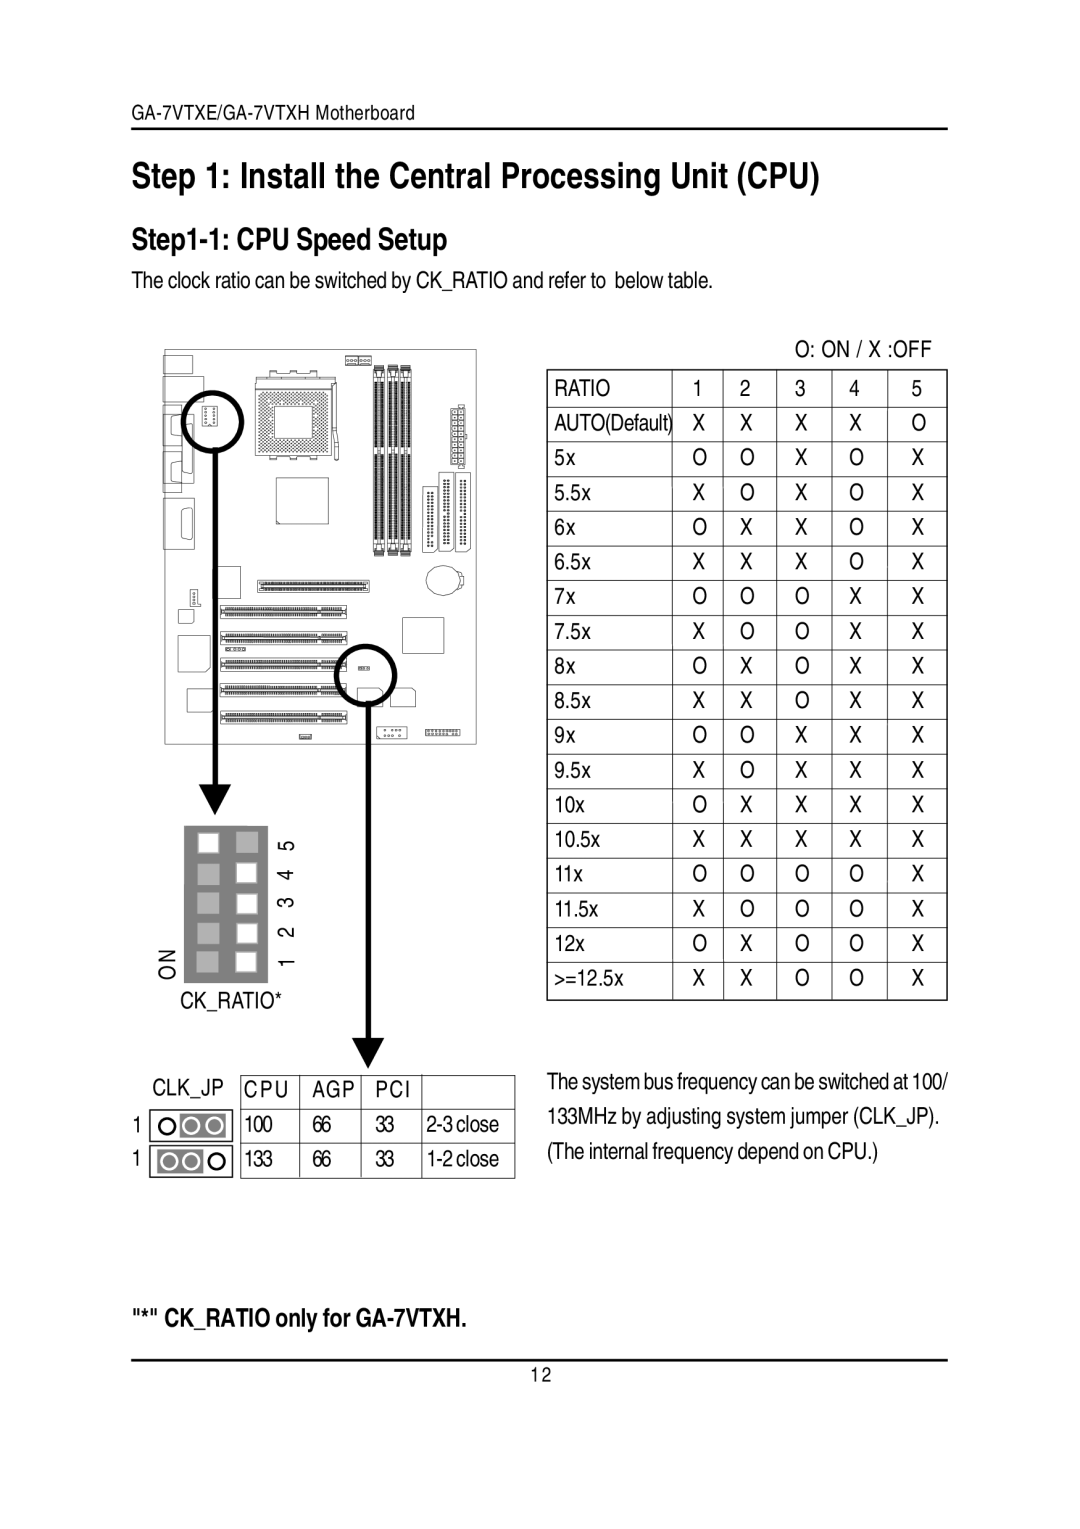 Gigabyte GA-7VTXE warranty Install the Central Processing Unit CPU, Ckratio only for GA-7VTXH, Ratio, Cpu Agp Pci 